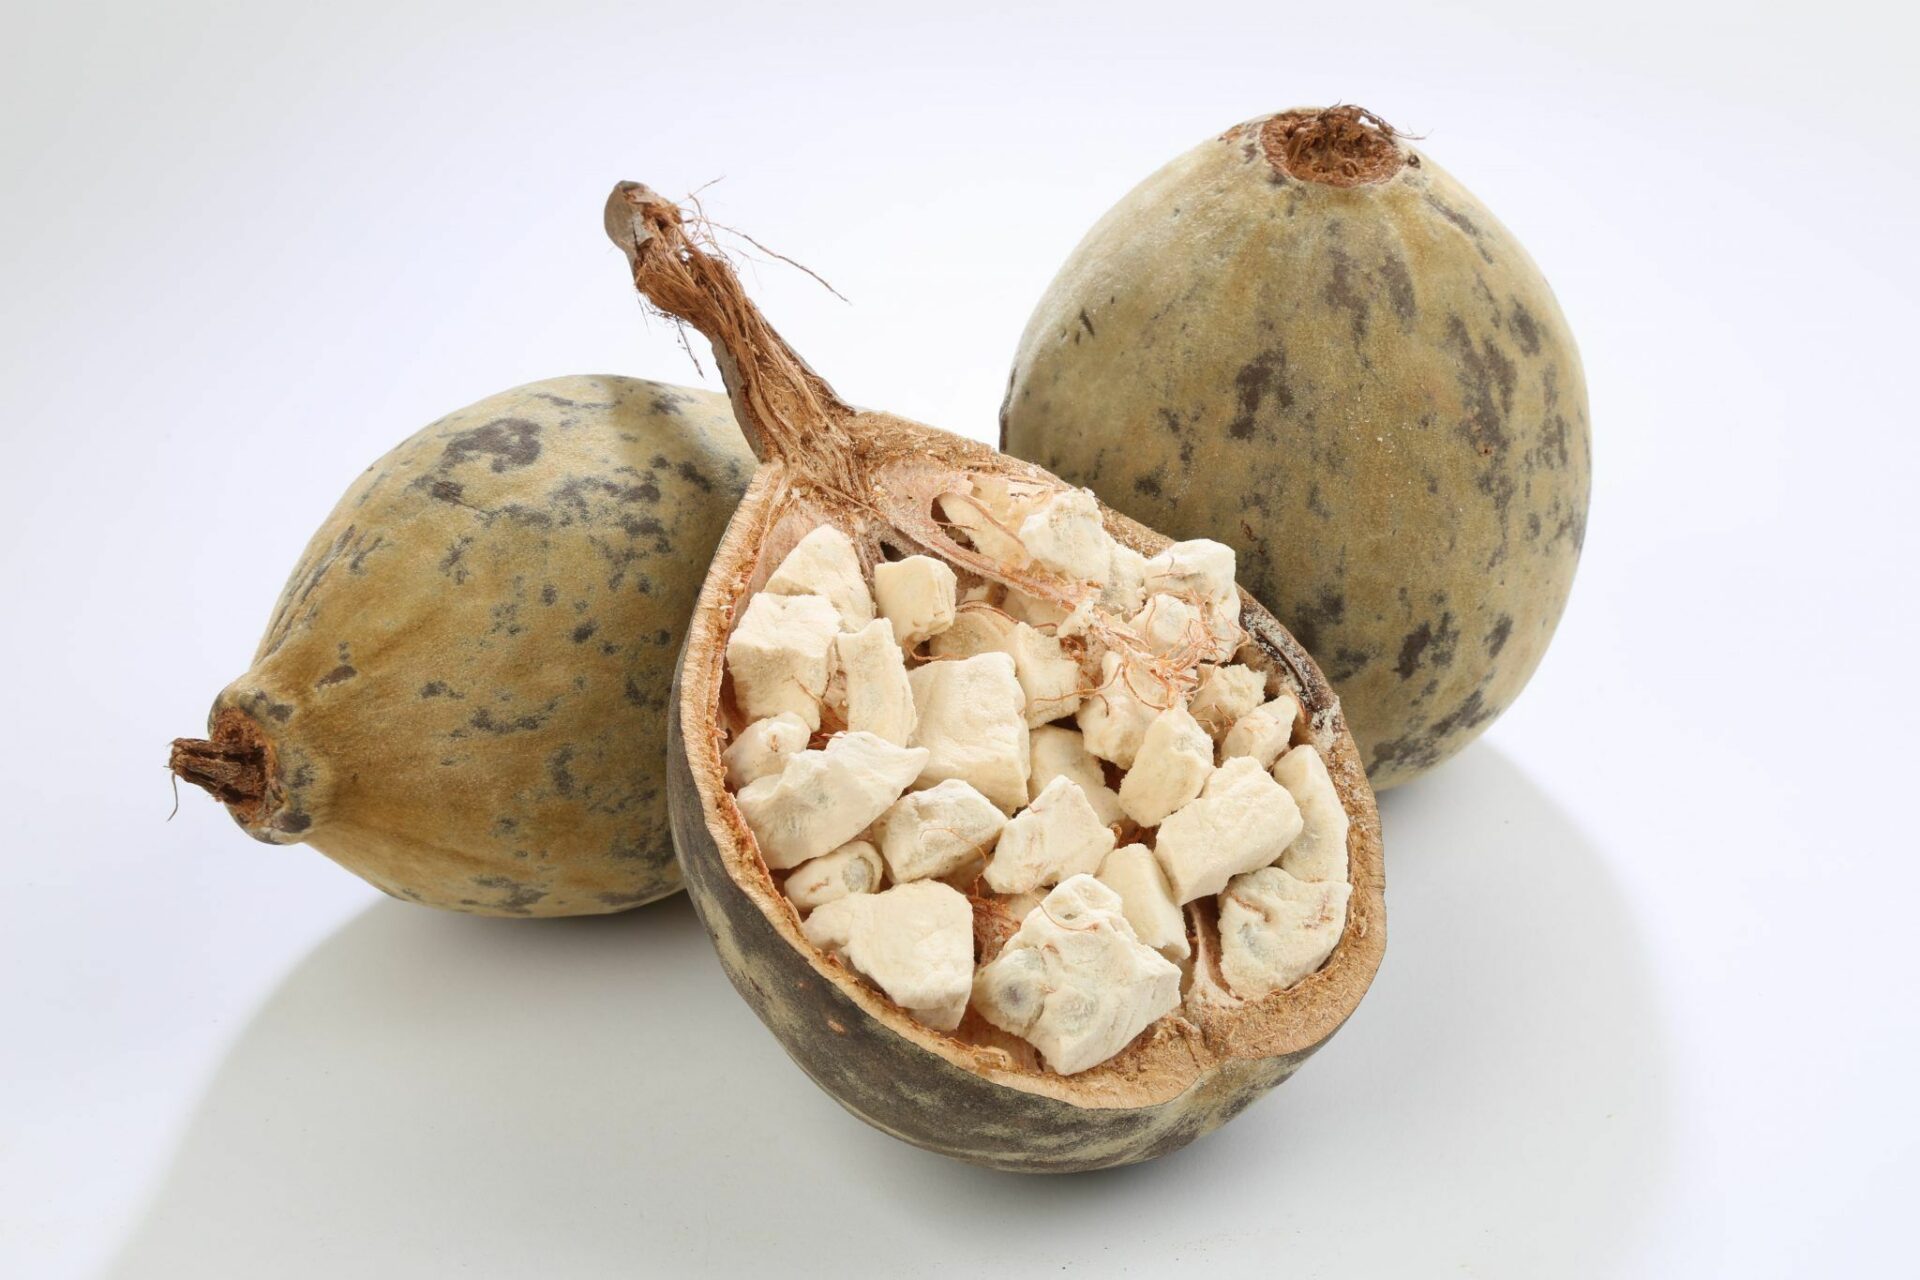 Baobab Fruit Powders Market Trends, Share, Size, Type & Future Forecast to 2032